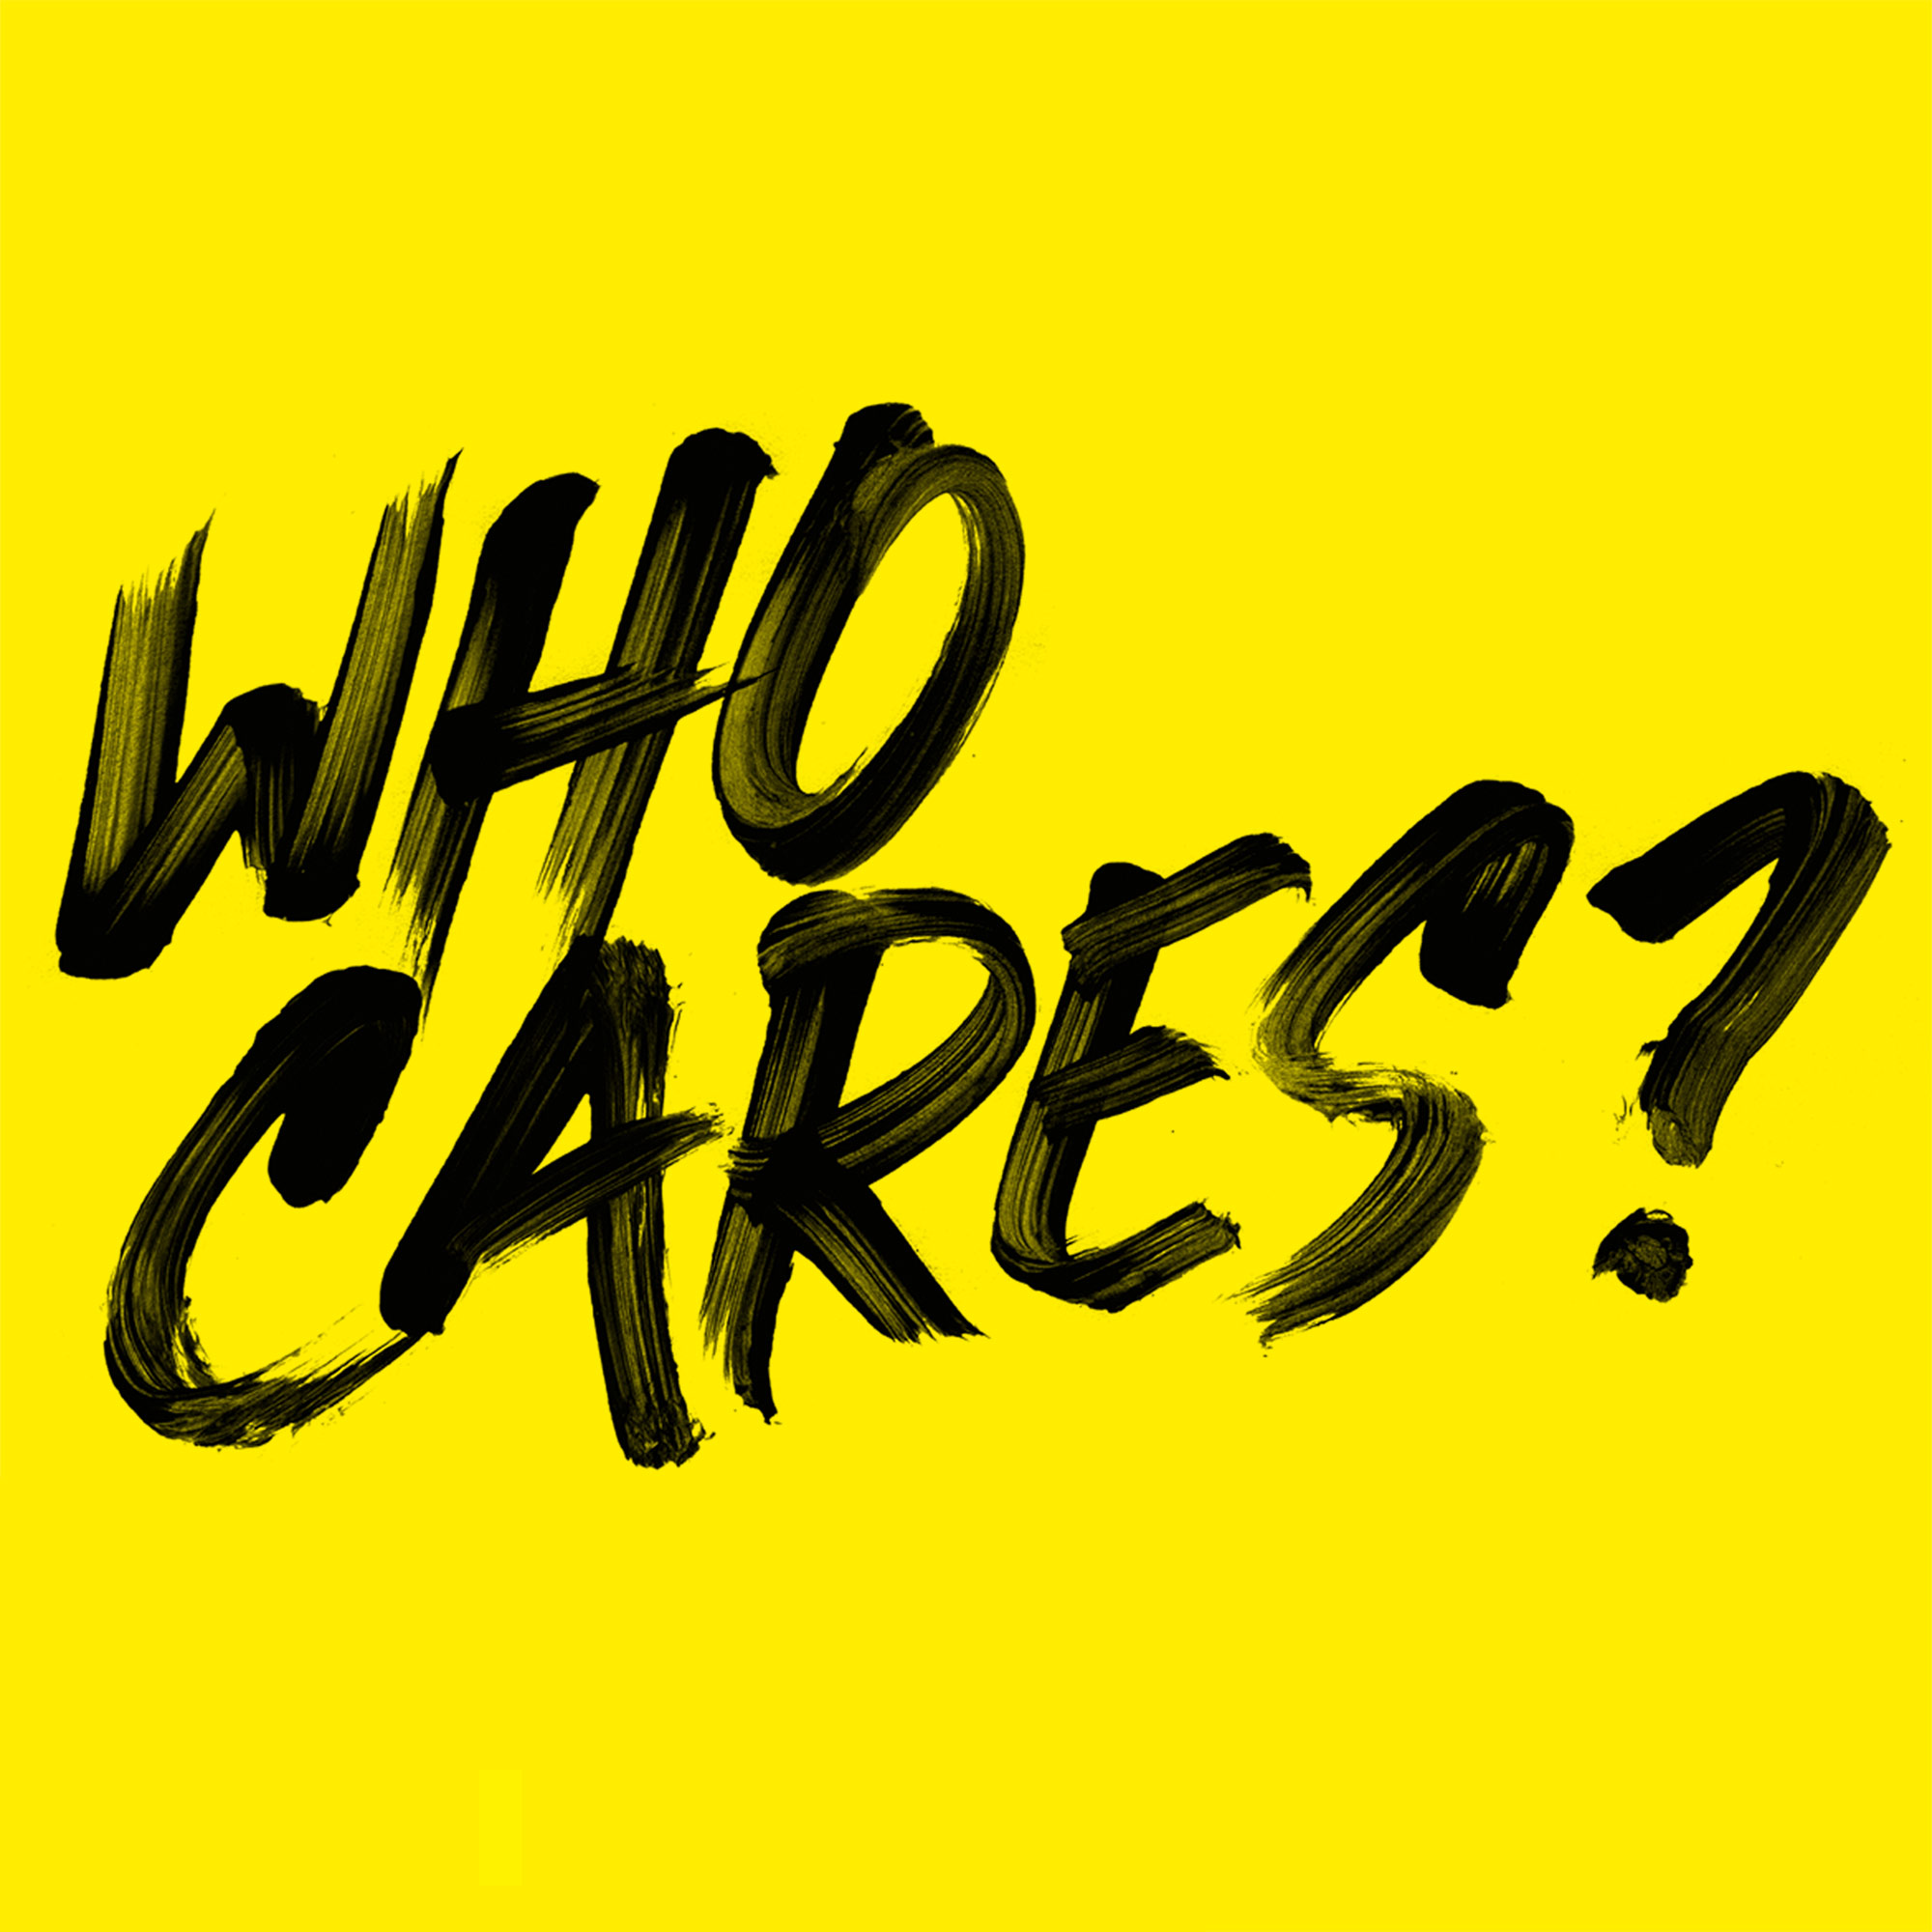 Who Cares? We do - University of Gloucestershire